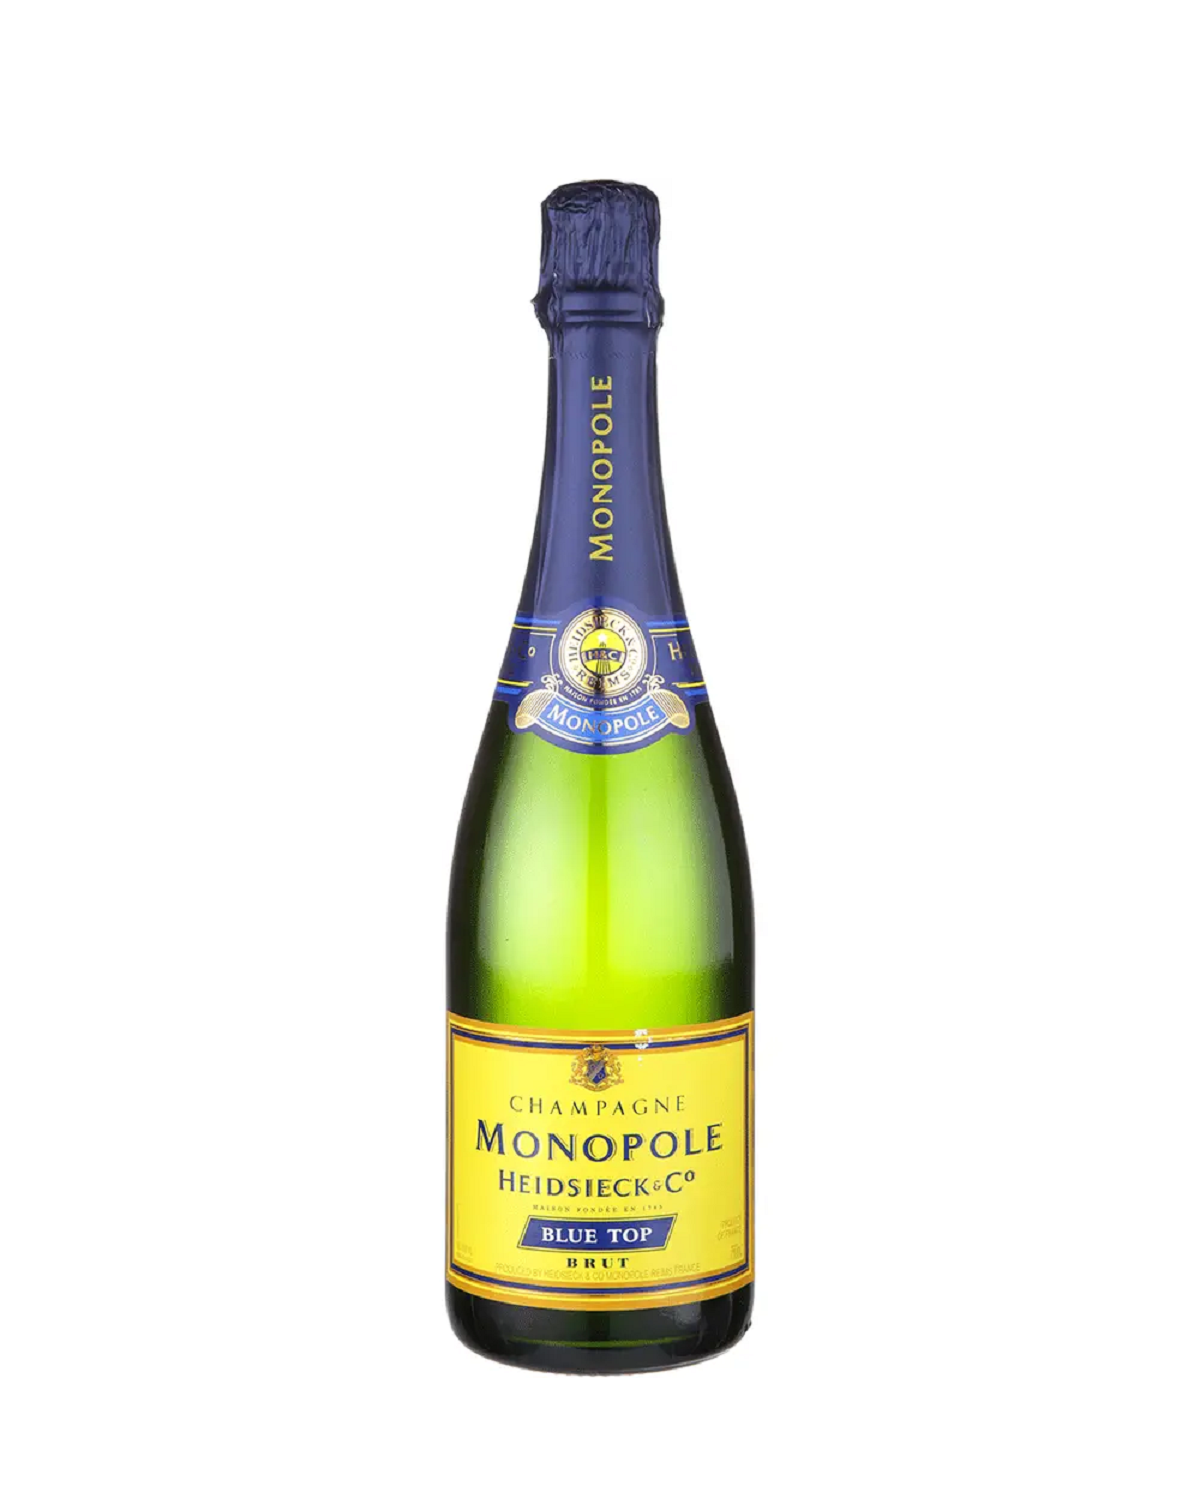 Heidsieck Monopole Champagne